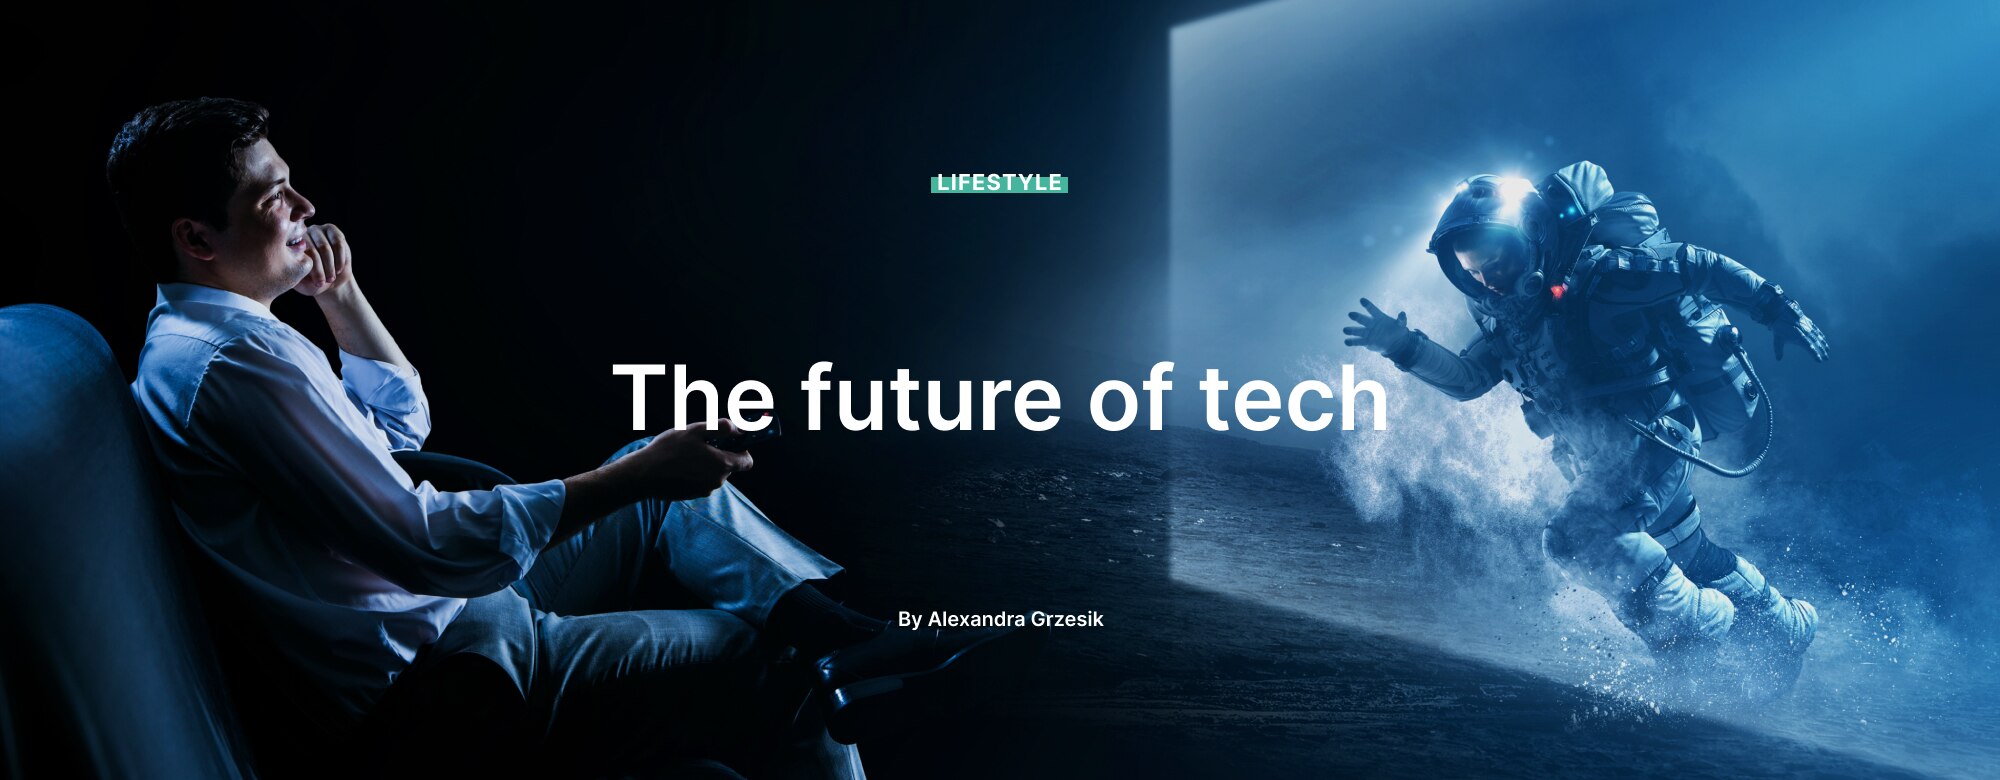 The future of tech